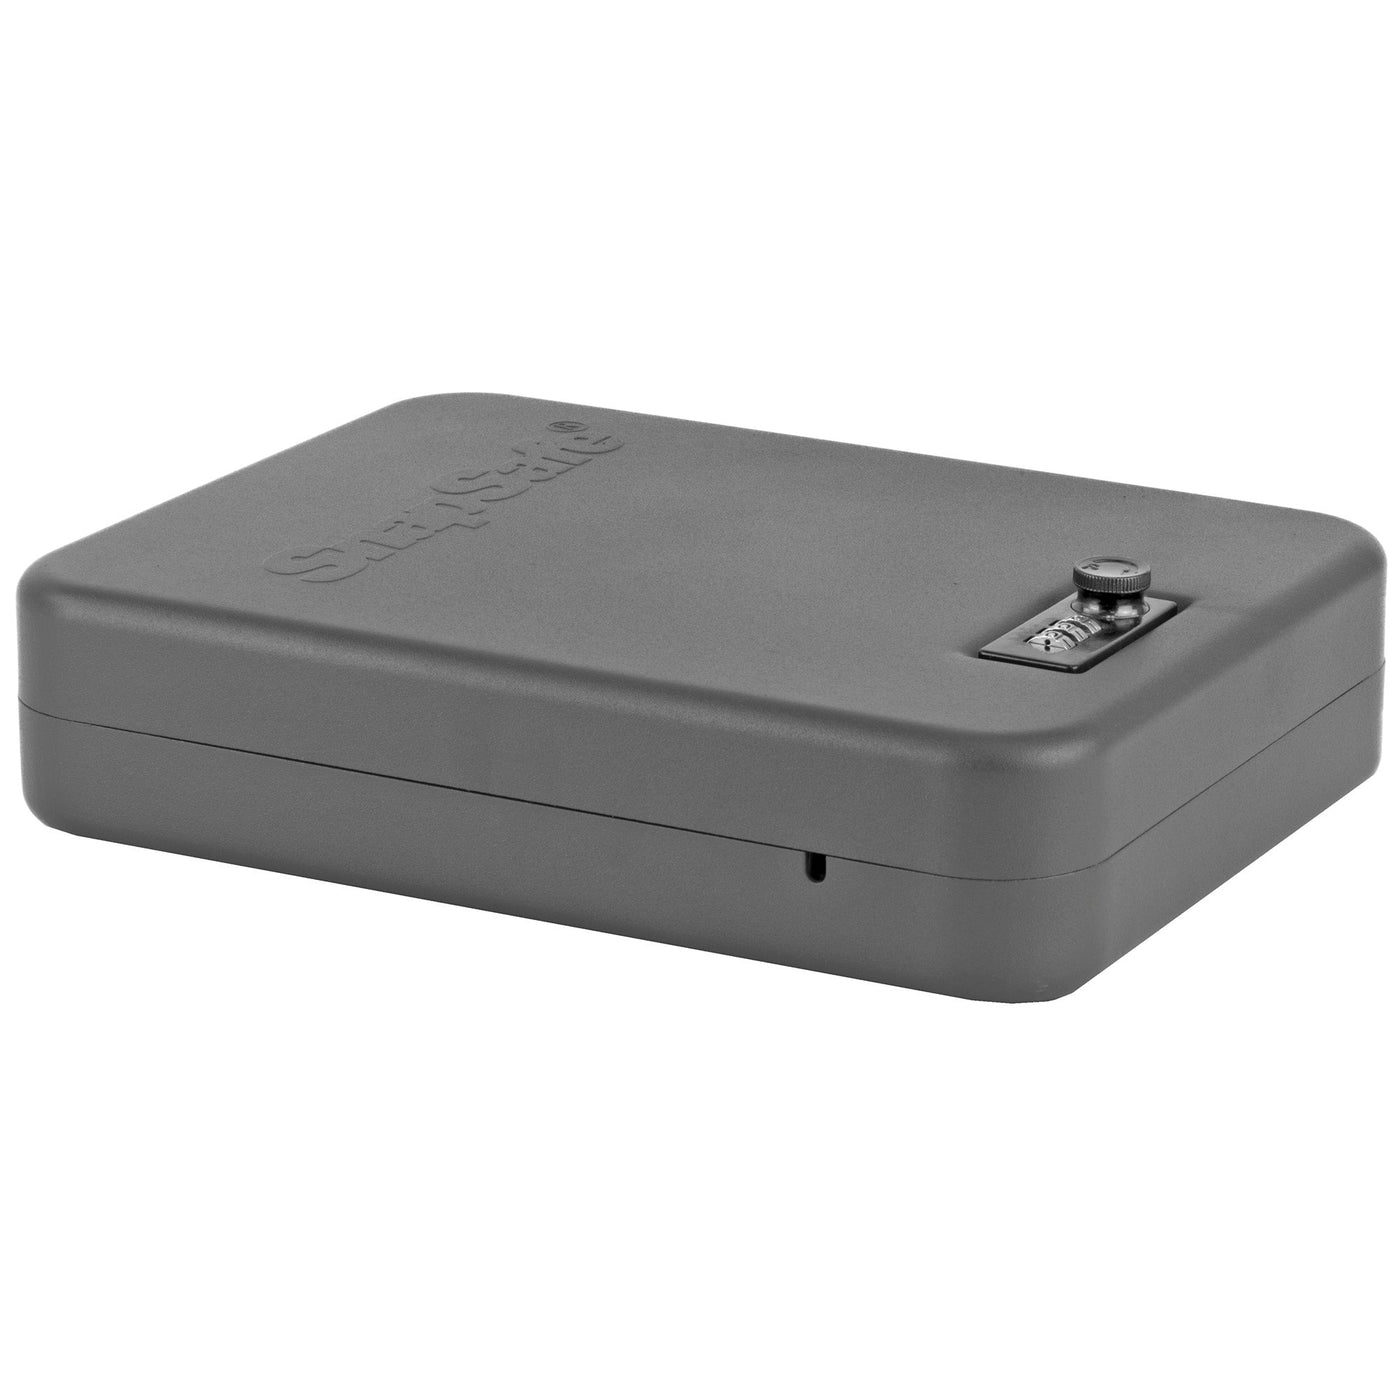 SnapSafe Snapsafe Xx-large Lock Box Combo Safes/Security